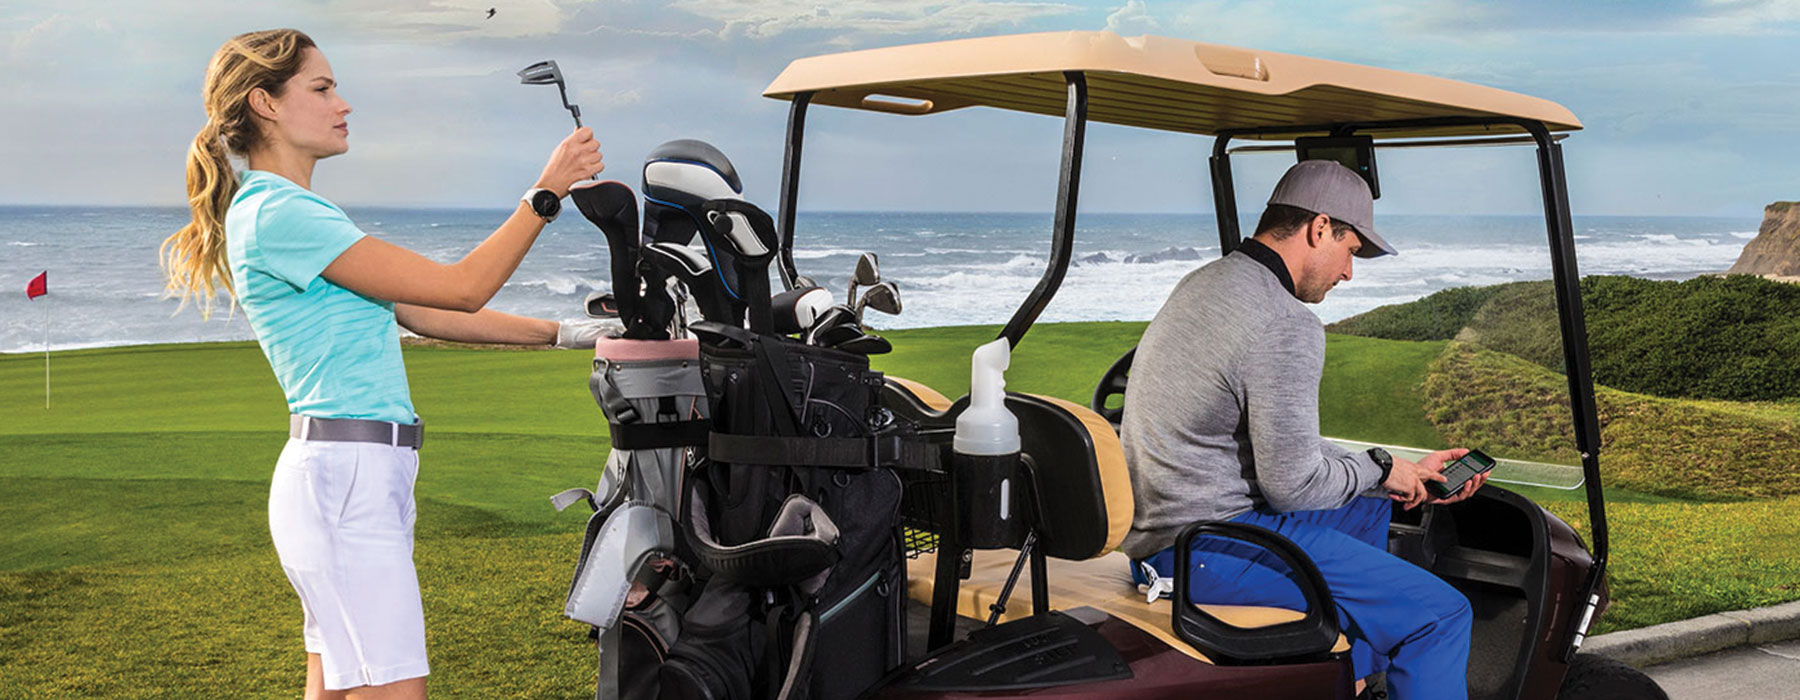 Garmin Golf App - A man and woman golfing